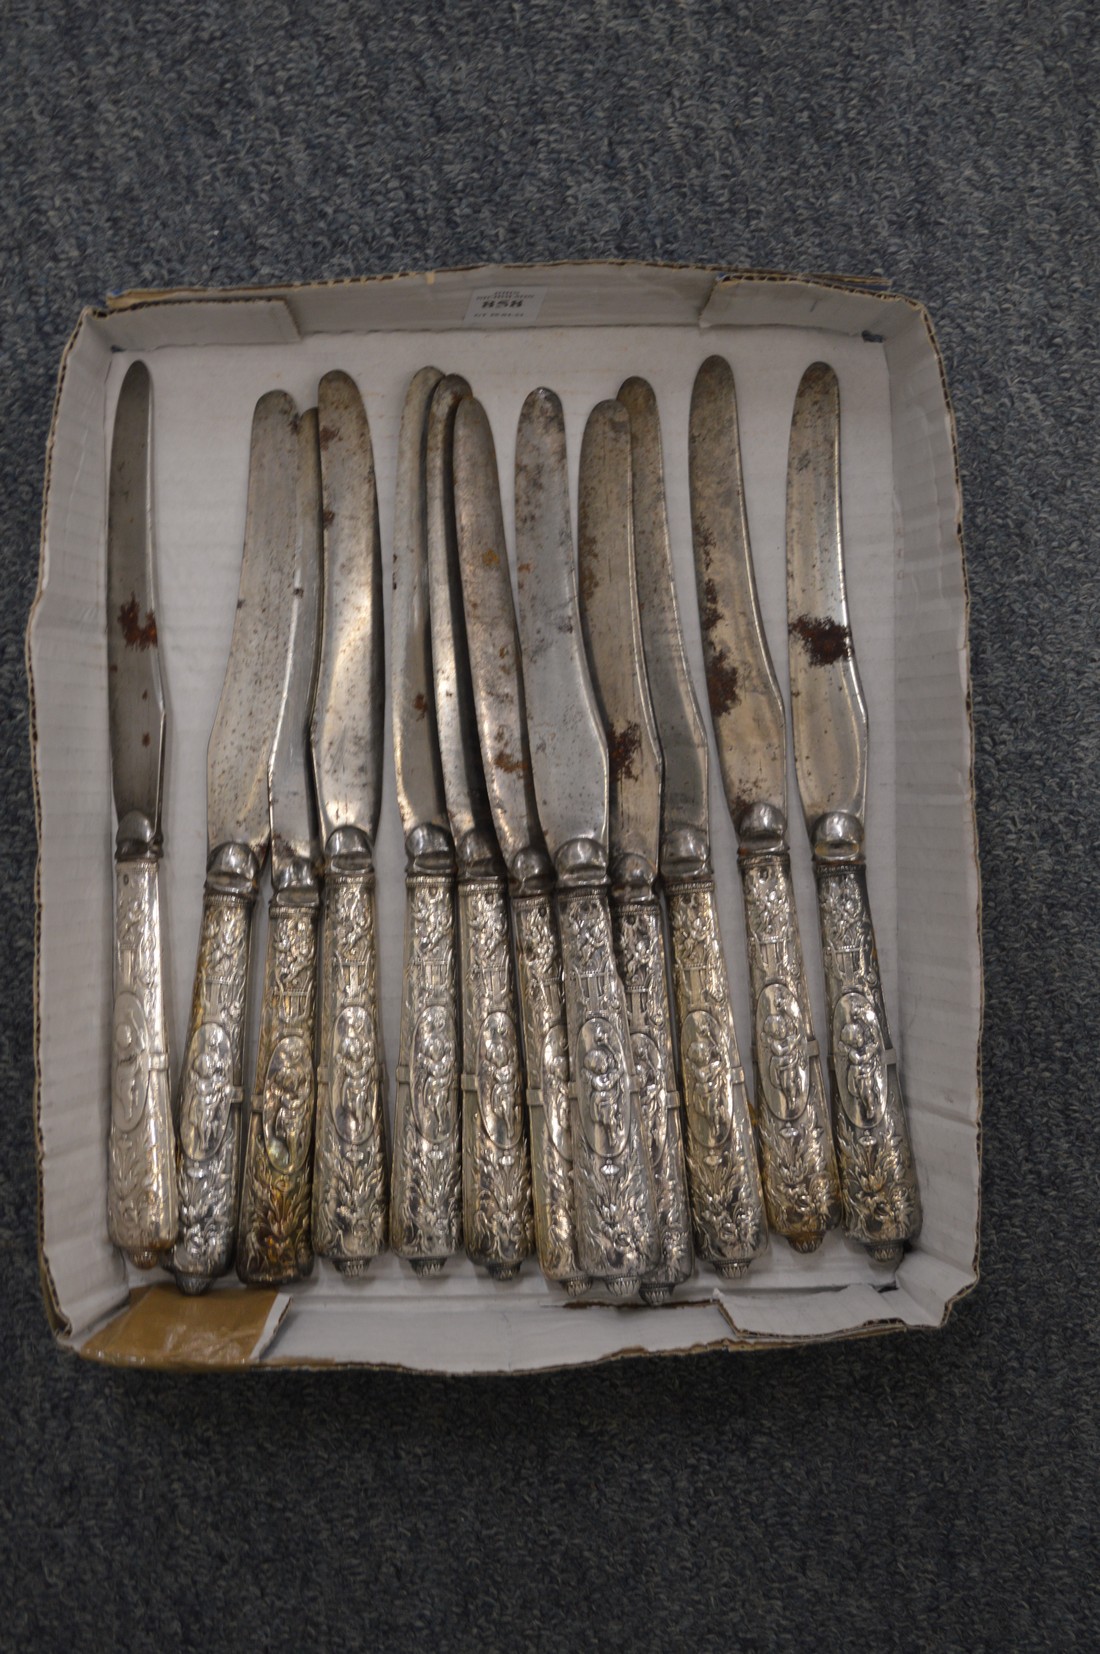 A set of twelve steel bladed knives with embossed handles.